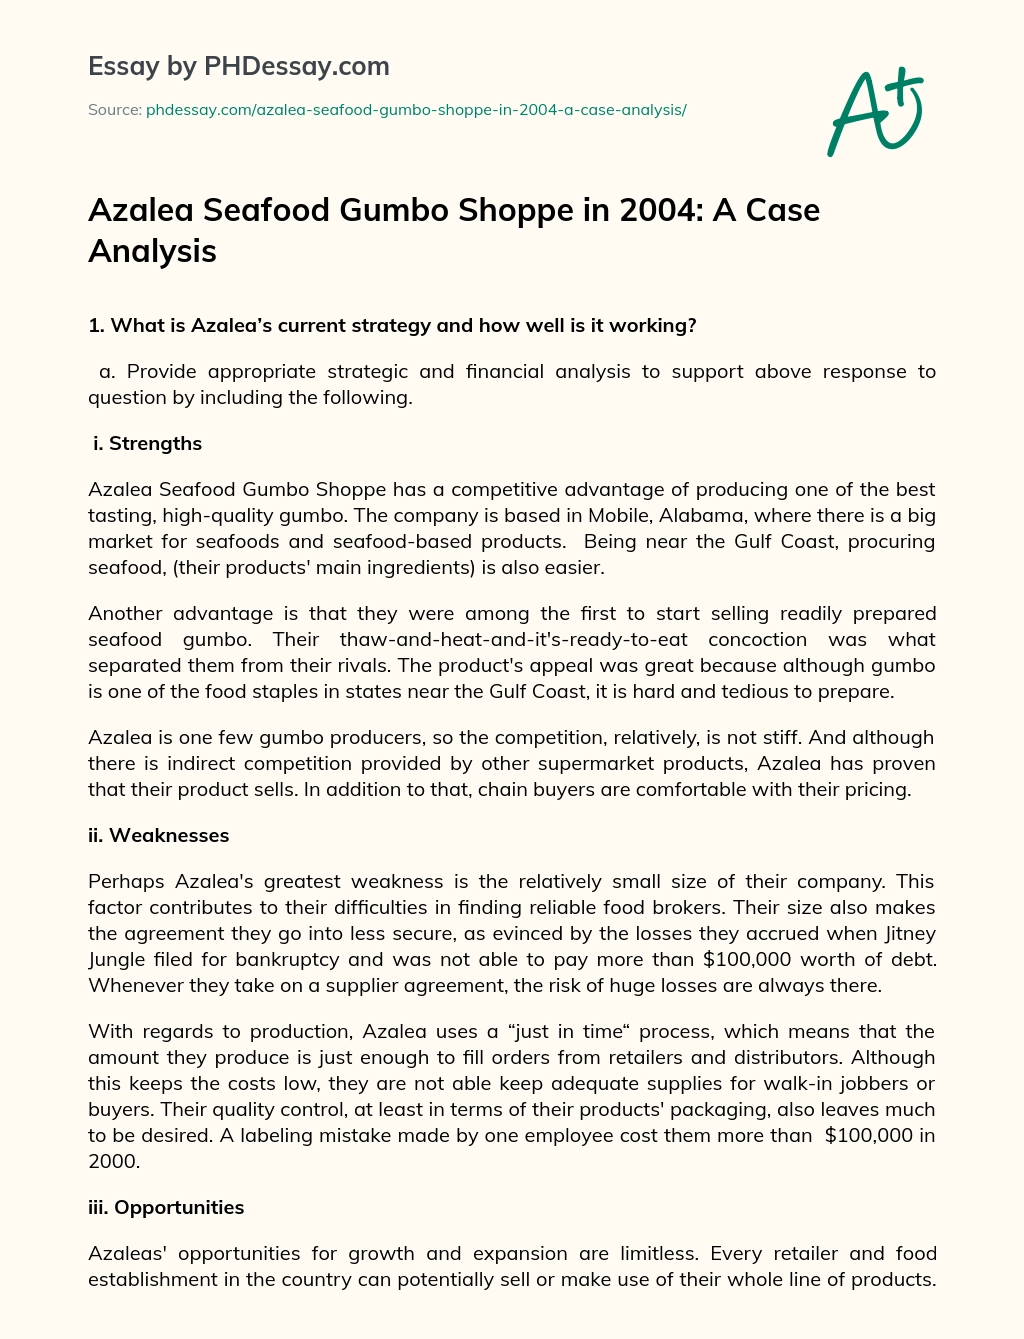 Azalea Seafood Gumbo Shoppe in 2004: A Case Analysis essay